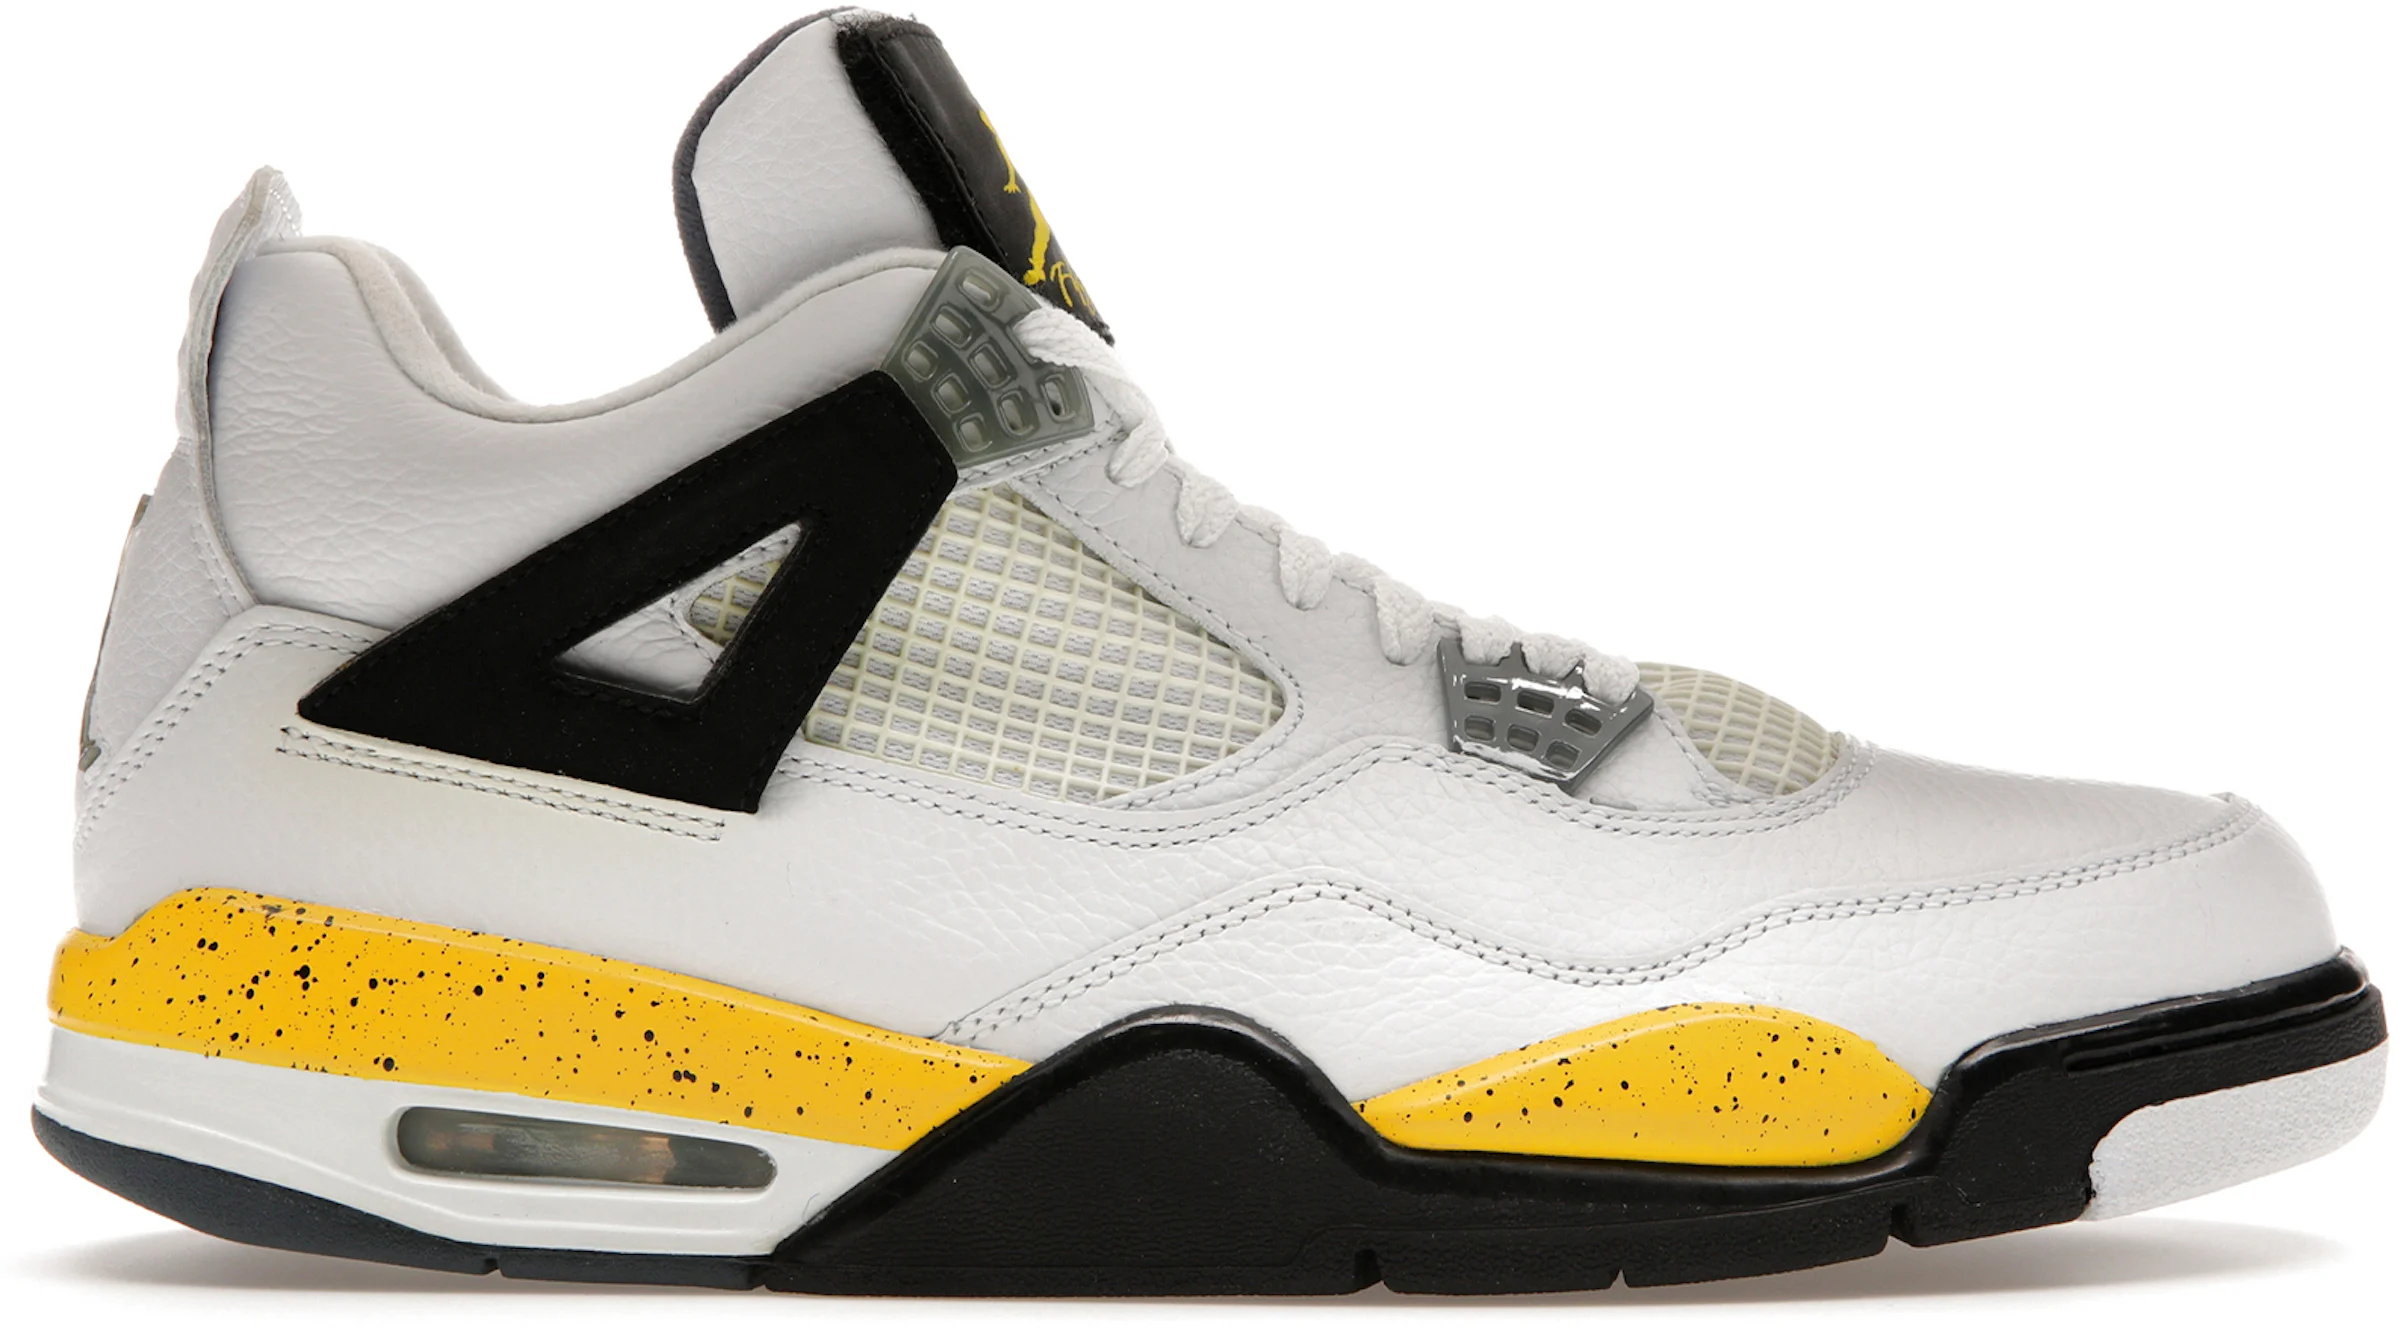  NIKE Air Jordan 4 Retro Grade School Black/White-Tour Yellow  408452-017 (us_Footwear_Size_System, Big_Kid, Men, Numeric, Medium,  Numeric_4), 4 Big Kid